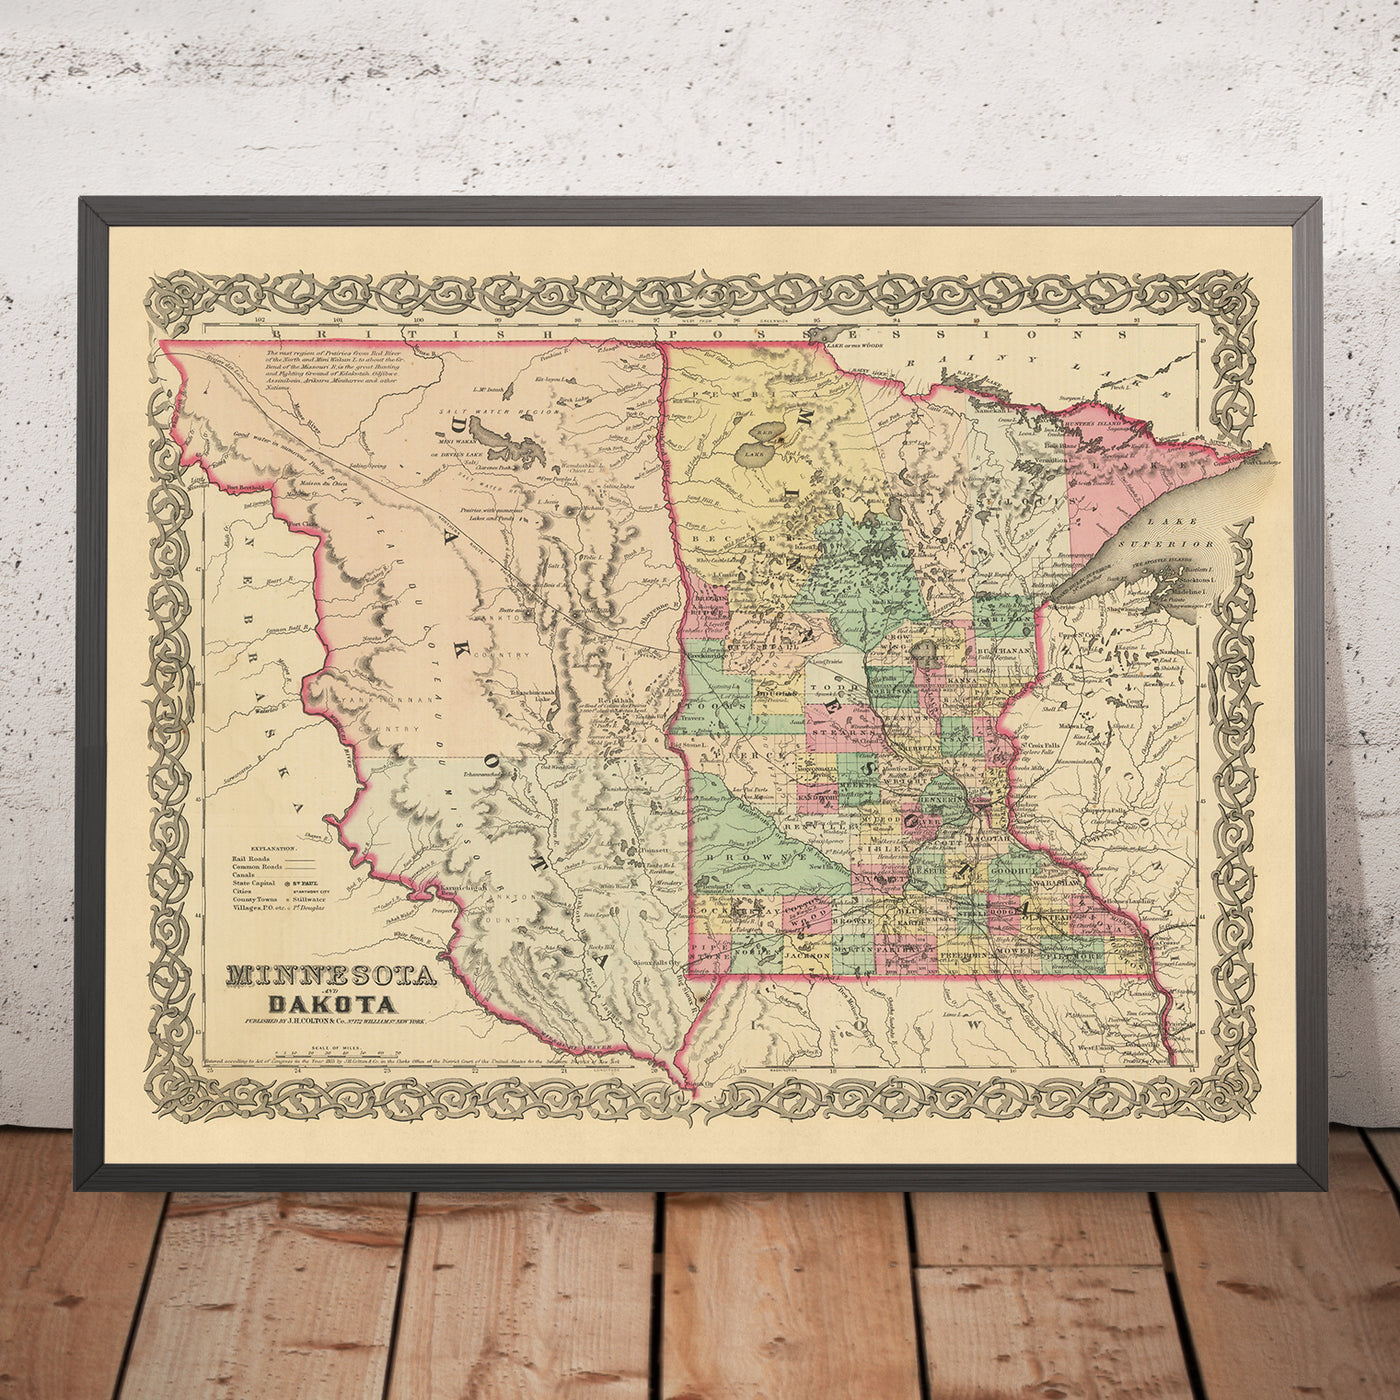 Alte Karte von Minnesota und Dakota von Colton, 1860: St. Paul, Minneapolis, St. Anthony, Mendota und Pembina